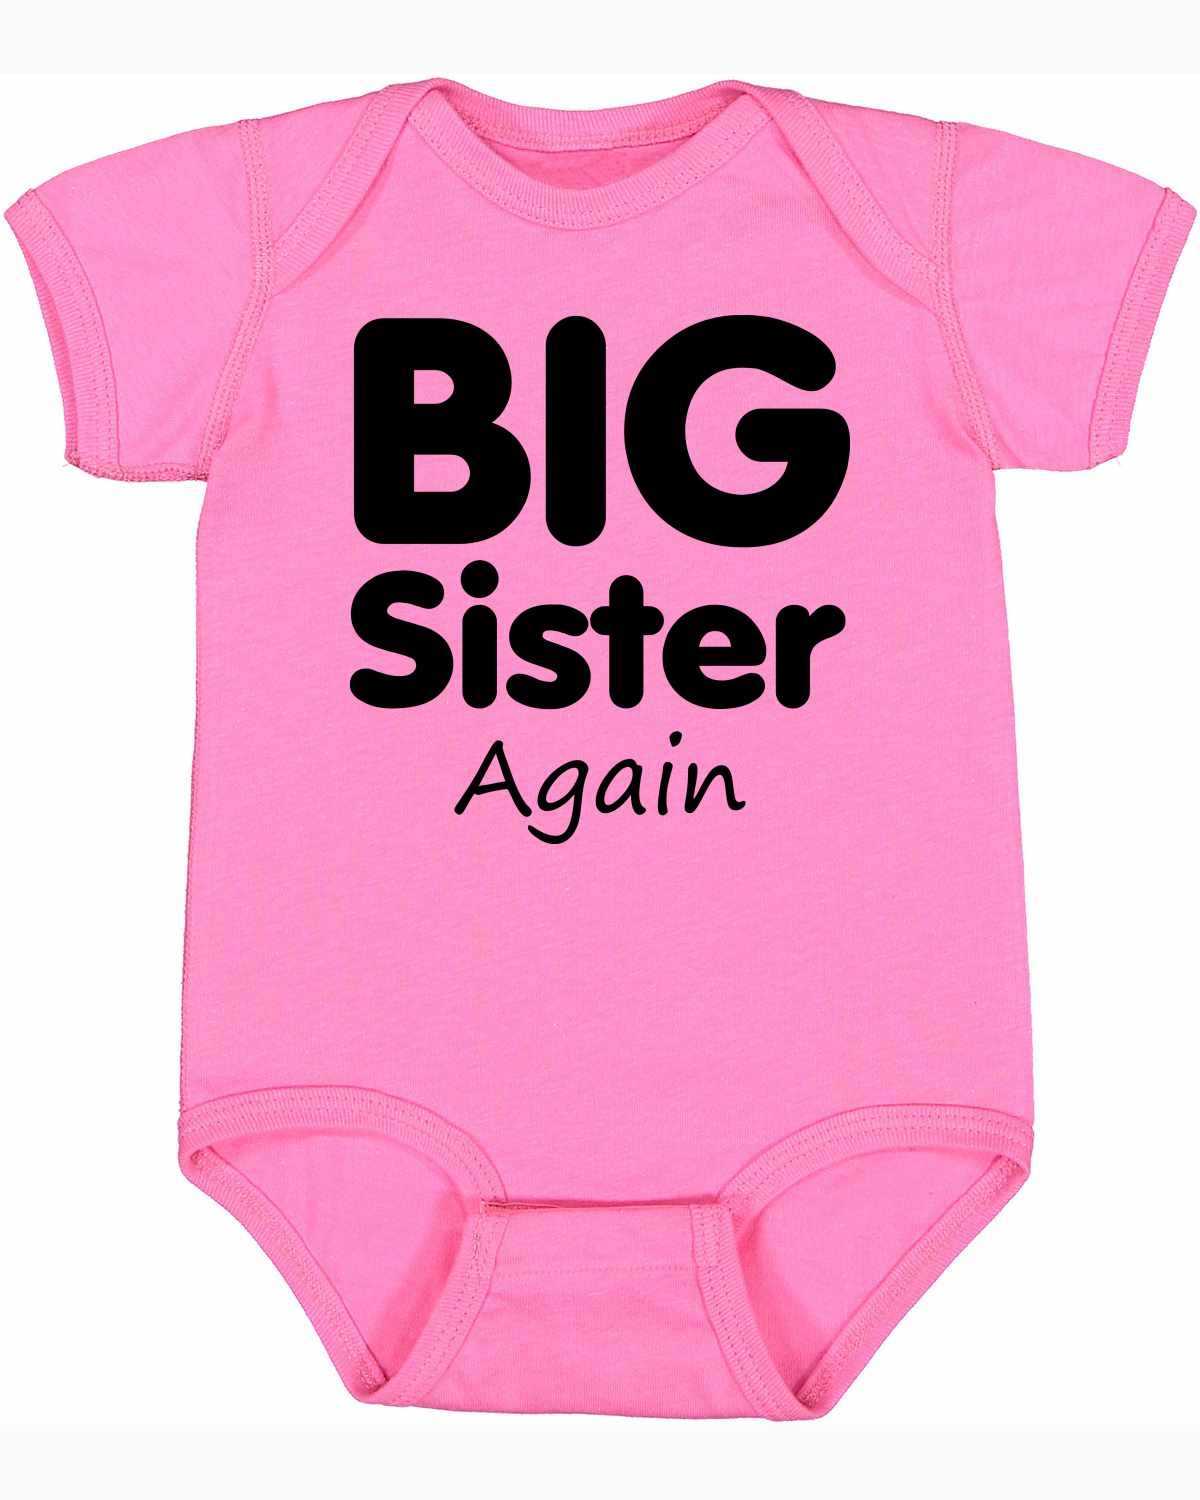 Big Sister Again on Infant BodySuit (#859-10)